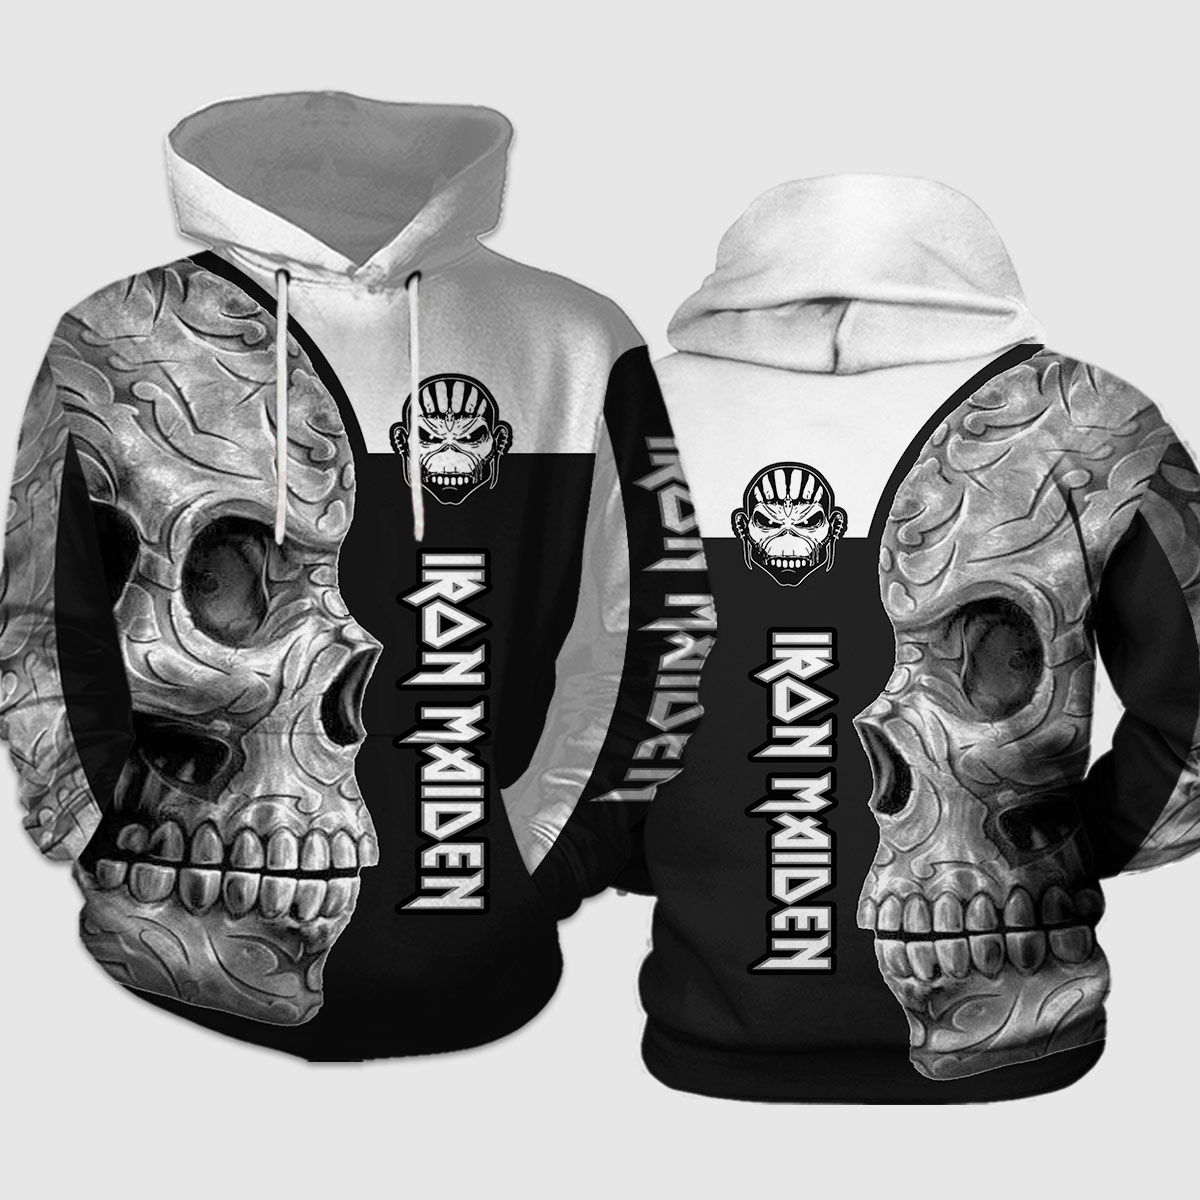 Iron Maiden Sugar Skull 3d hoodie and shirt – Hothot 140320